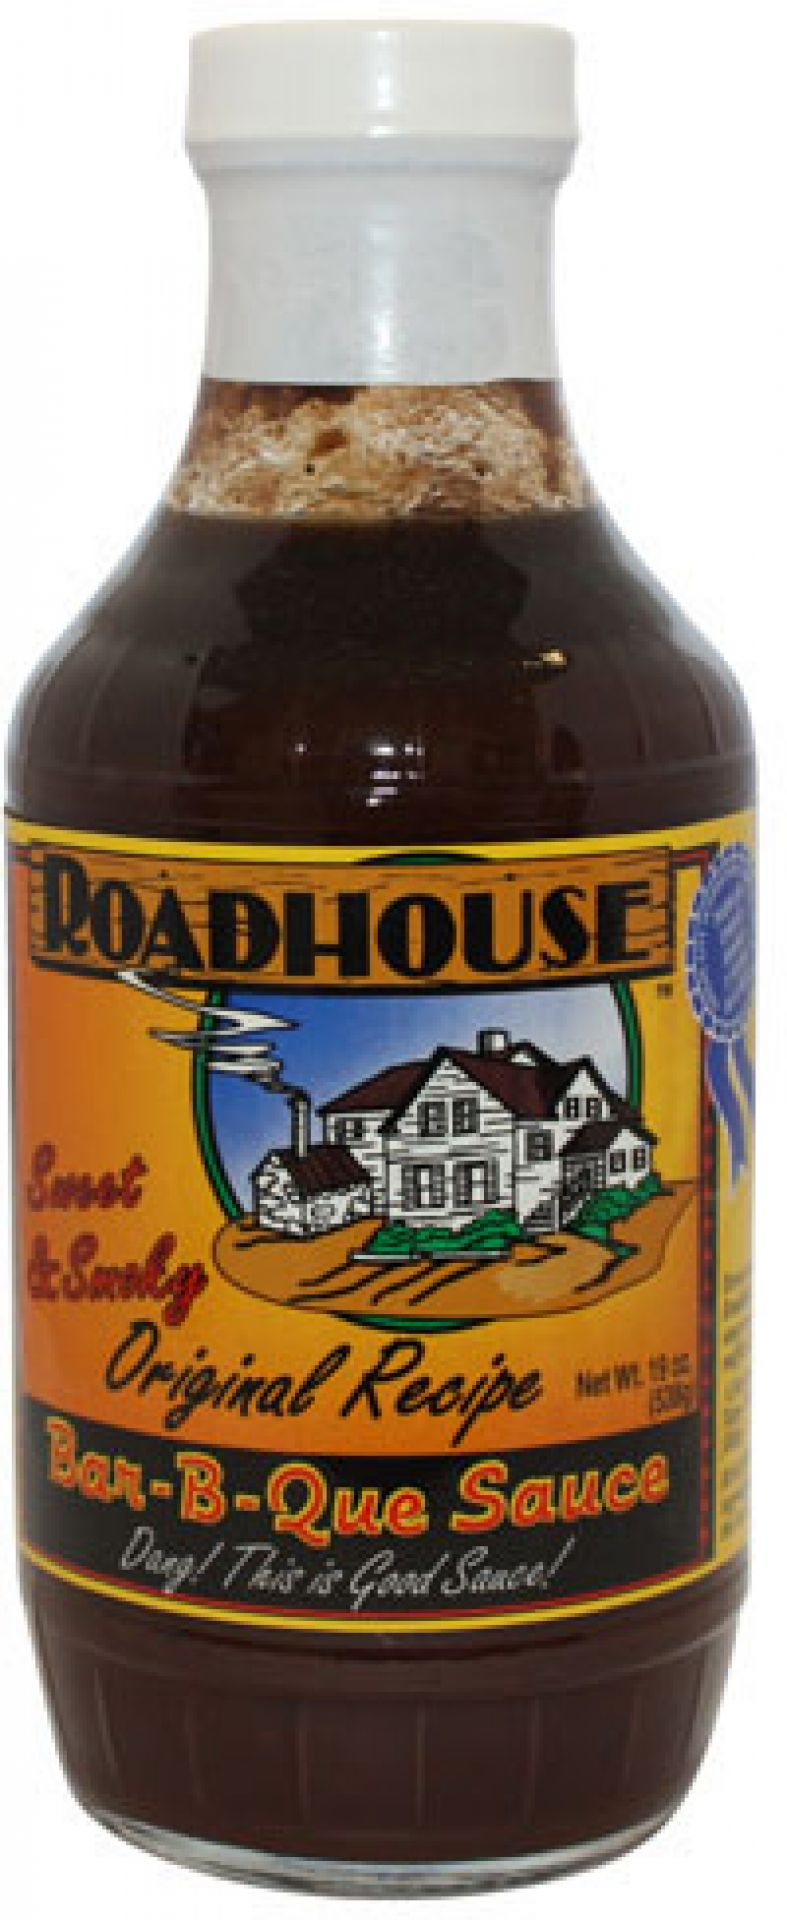 Roadhouse Original Receipe Sweet & Smoky BBQ Sauce